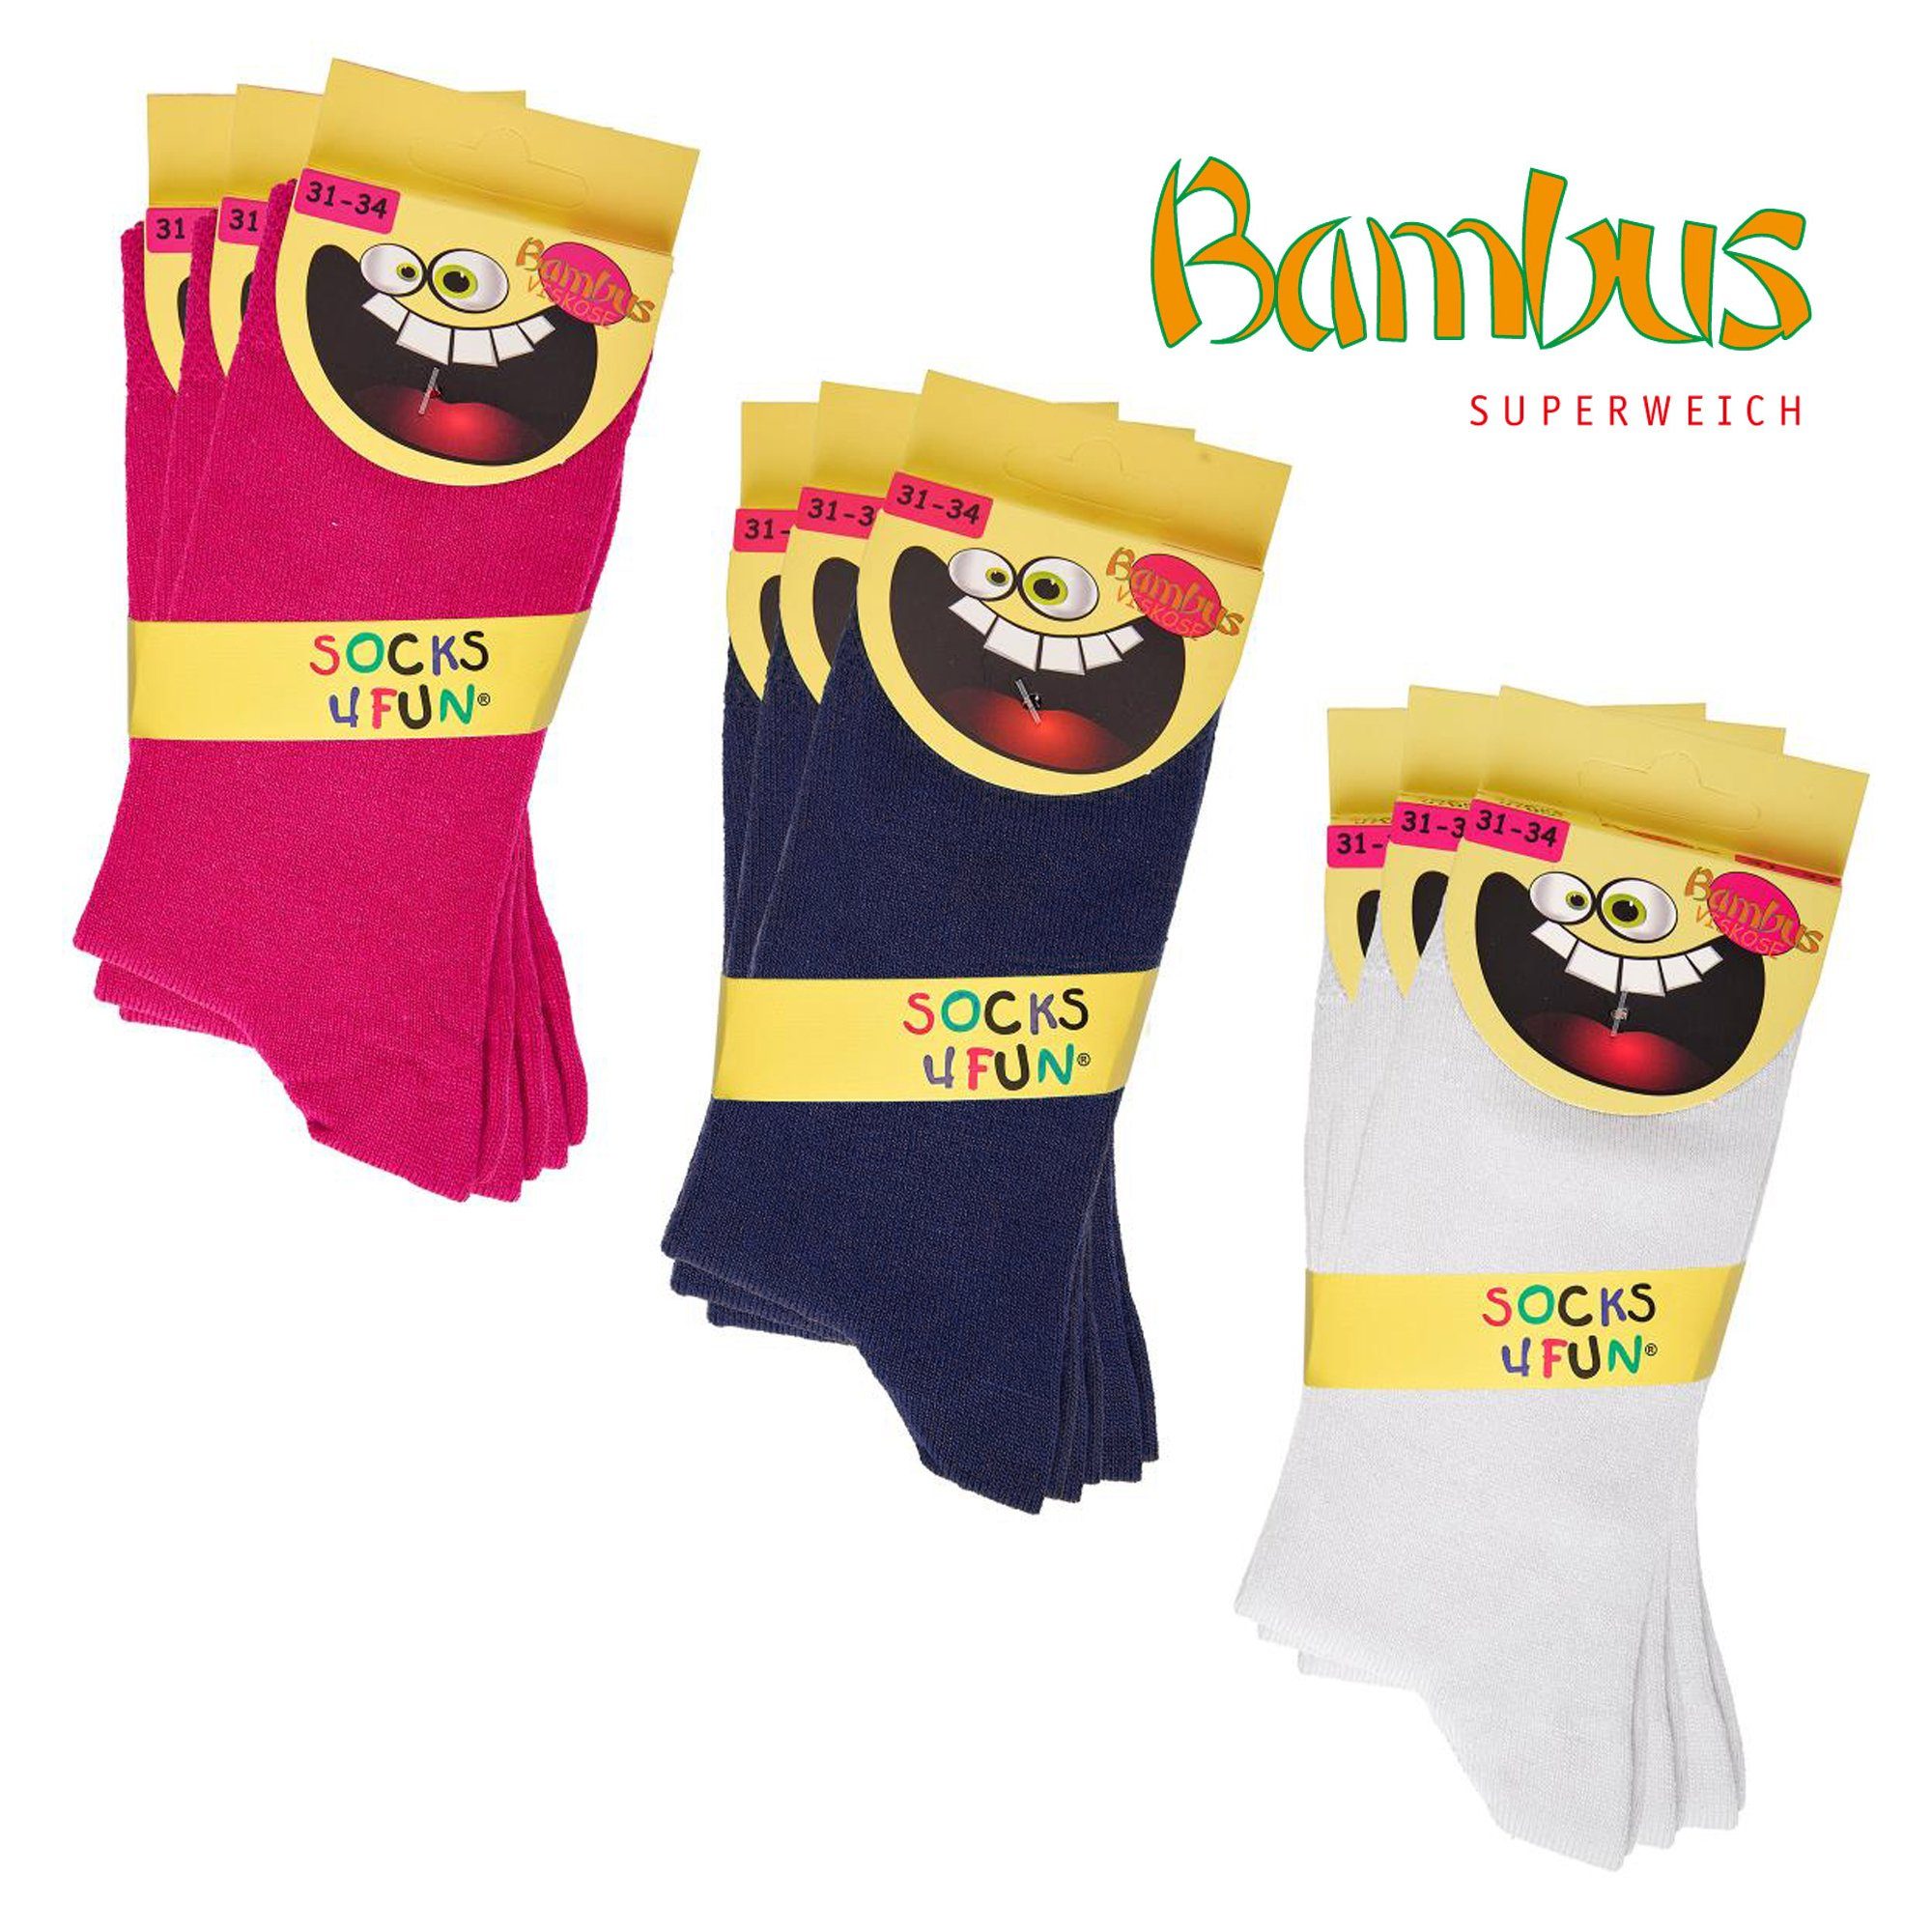 Kinder Mädchen, Kindersocken unifarbene Socks Jungen Langsocken & Fun (Packung, 3170 Socken, pink+marine+weiss 9 9-Paar, 4 Paar)